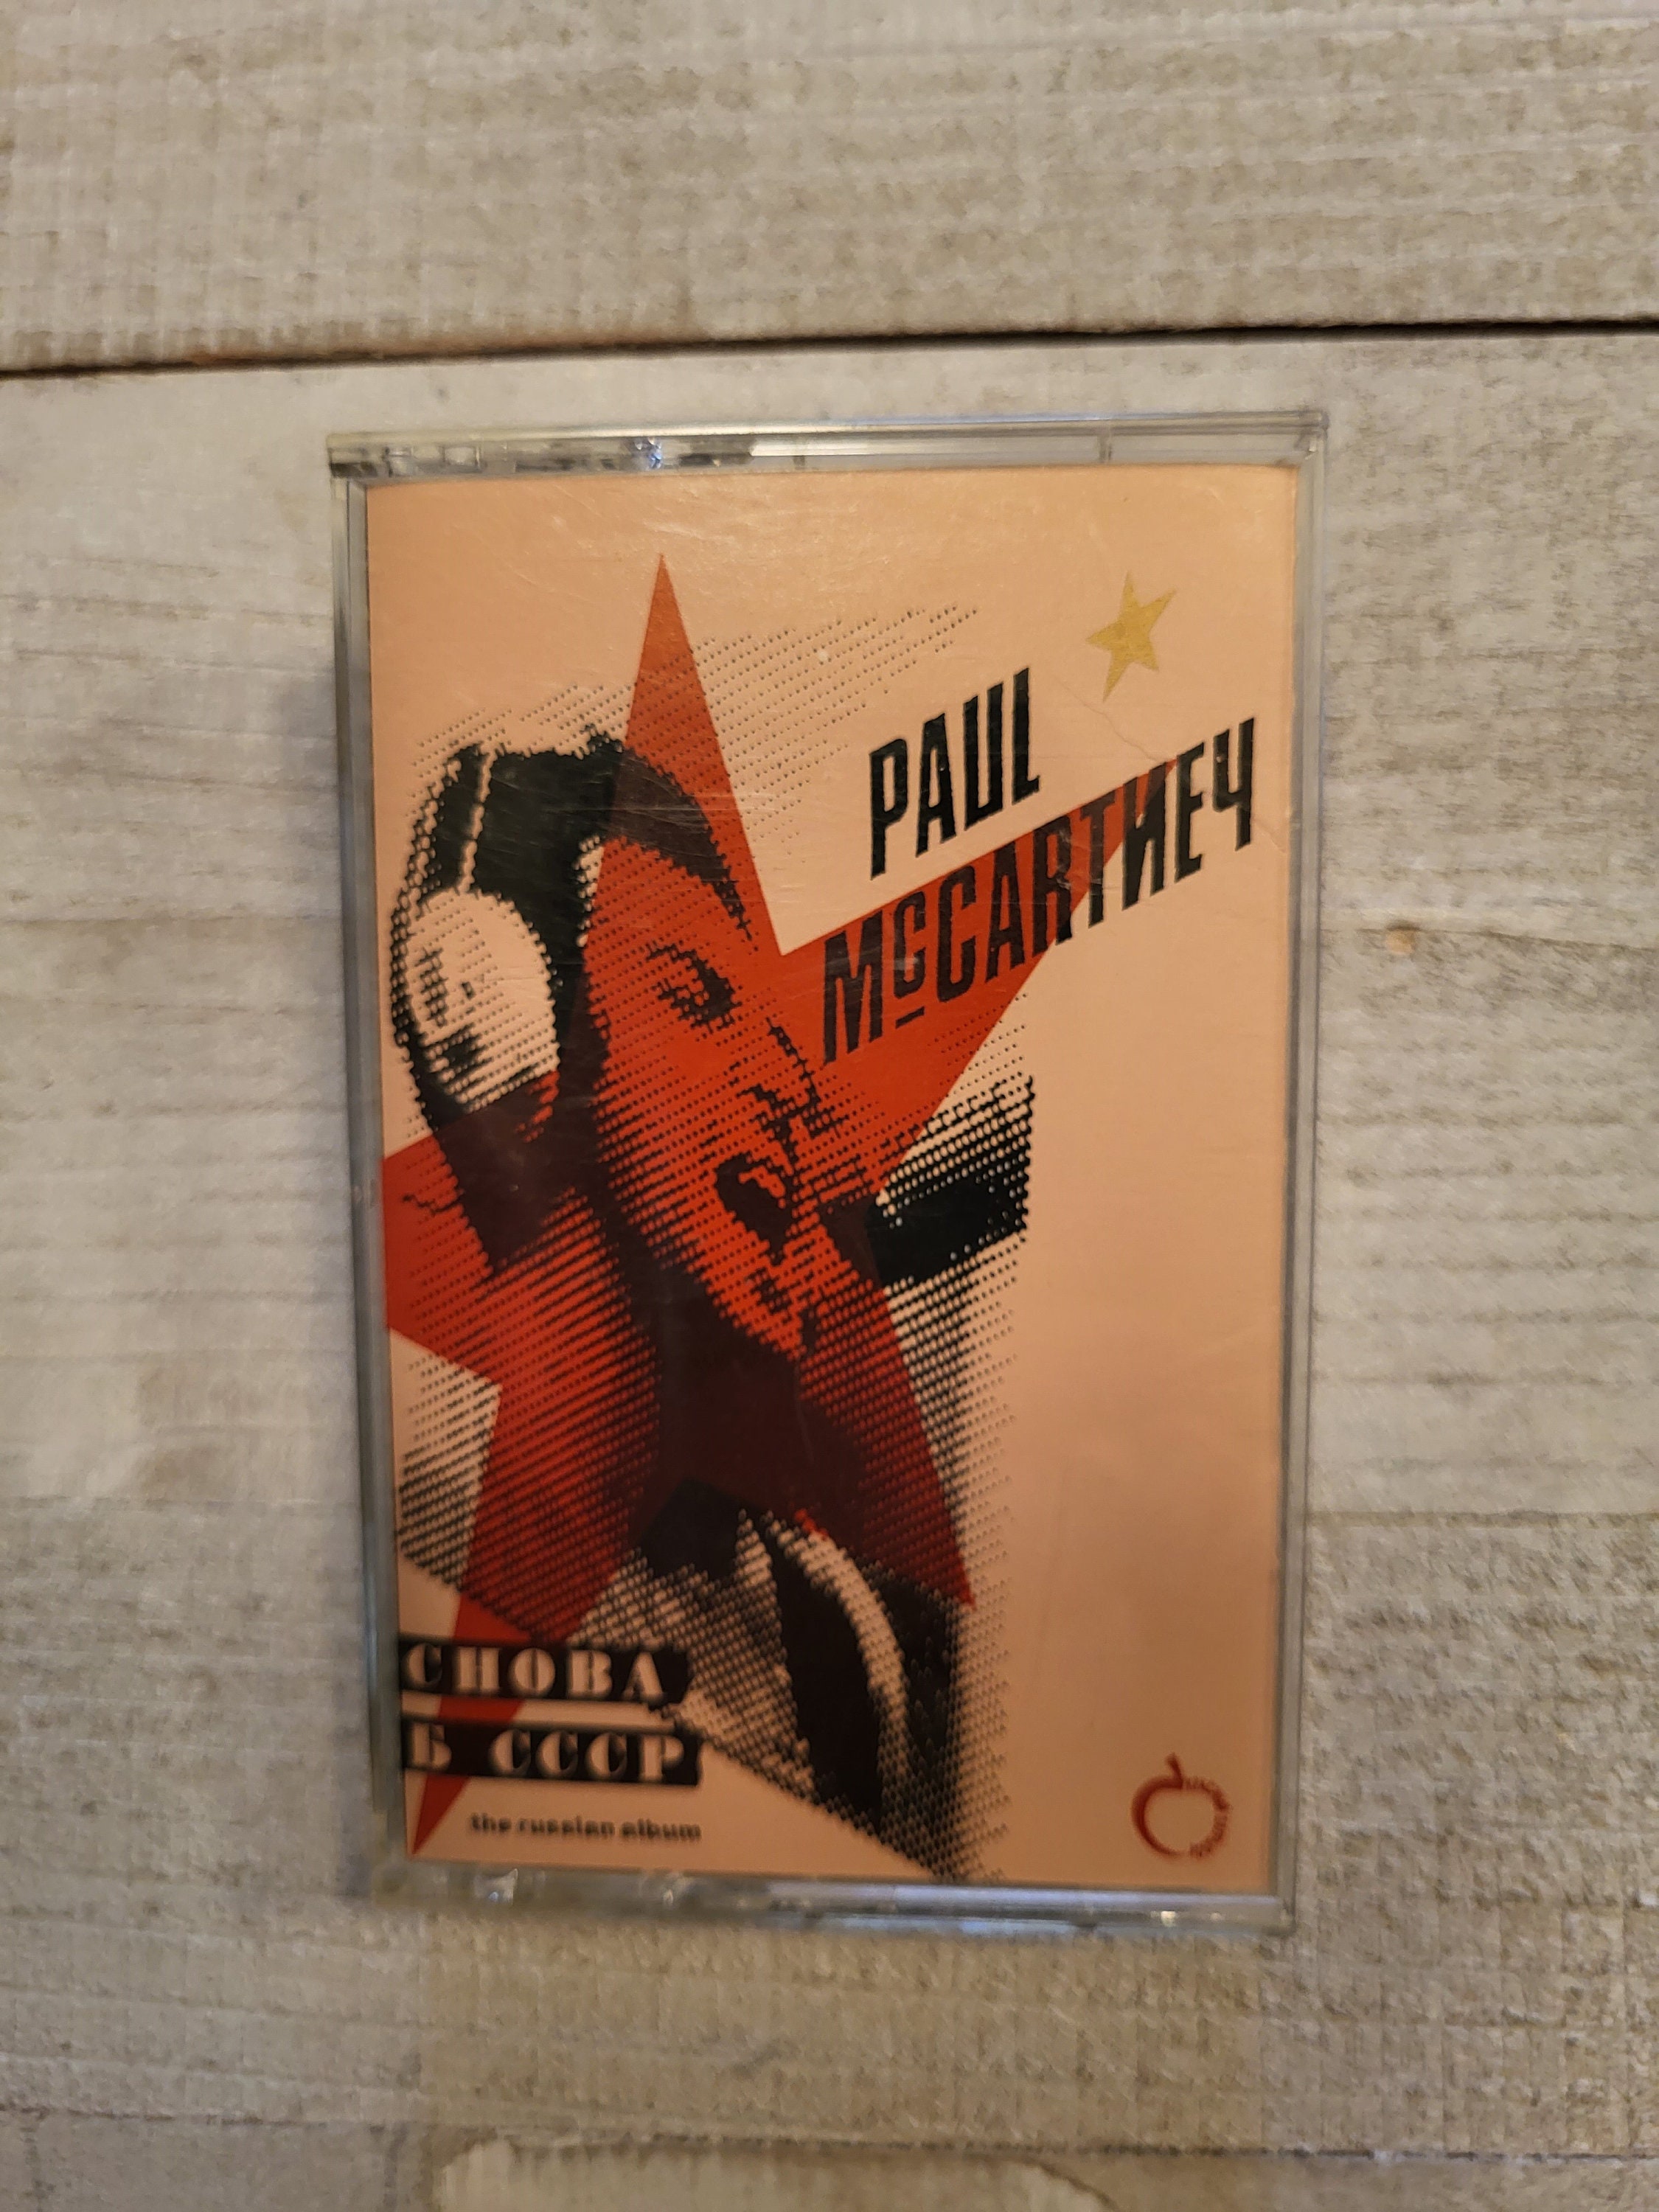 PAUL McCARTNEY CHOBA B CCCP & MORE CD